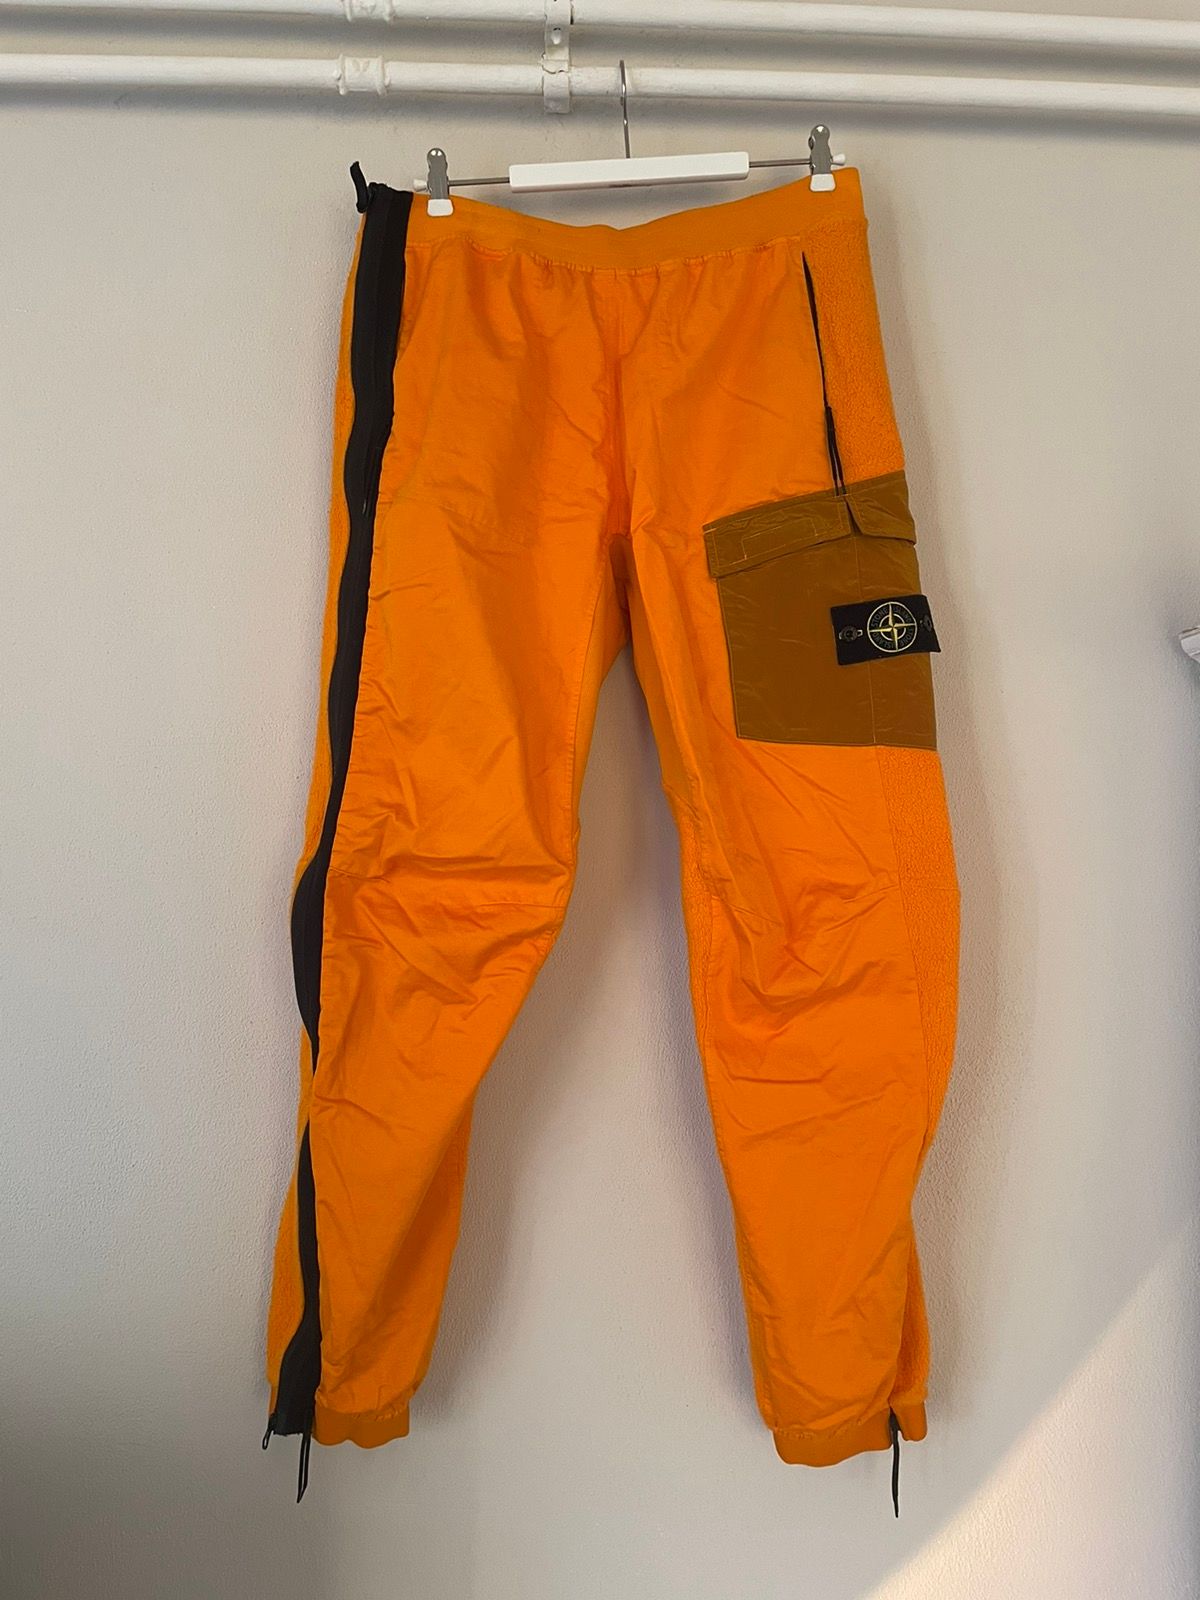 Stone Island Orange Cargo Sweat Pants Size US 34 / EU 50 - 1 Preview